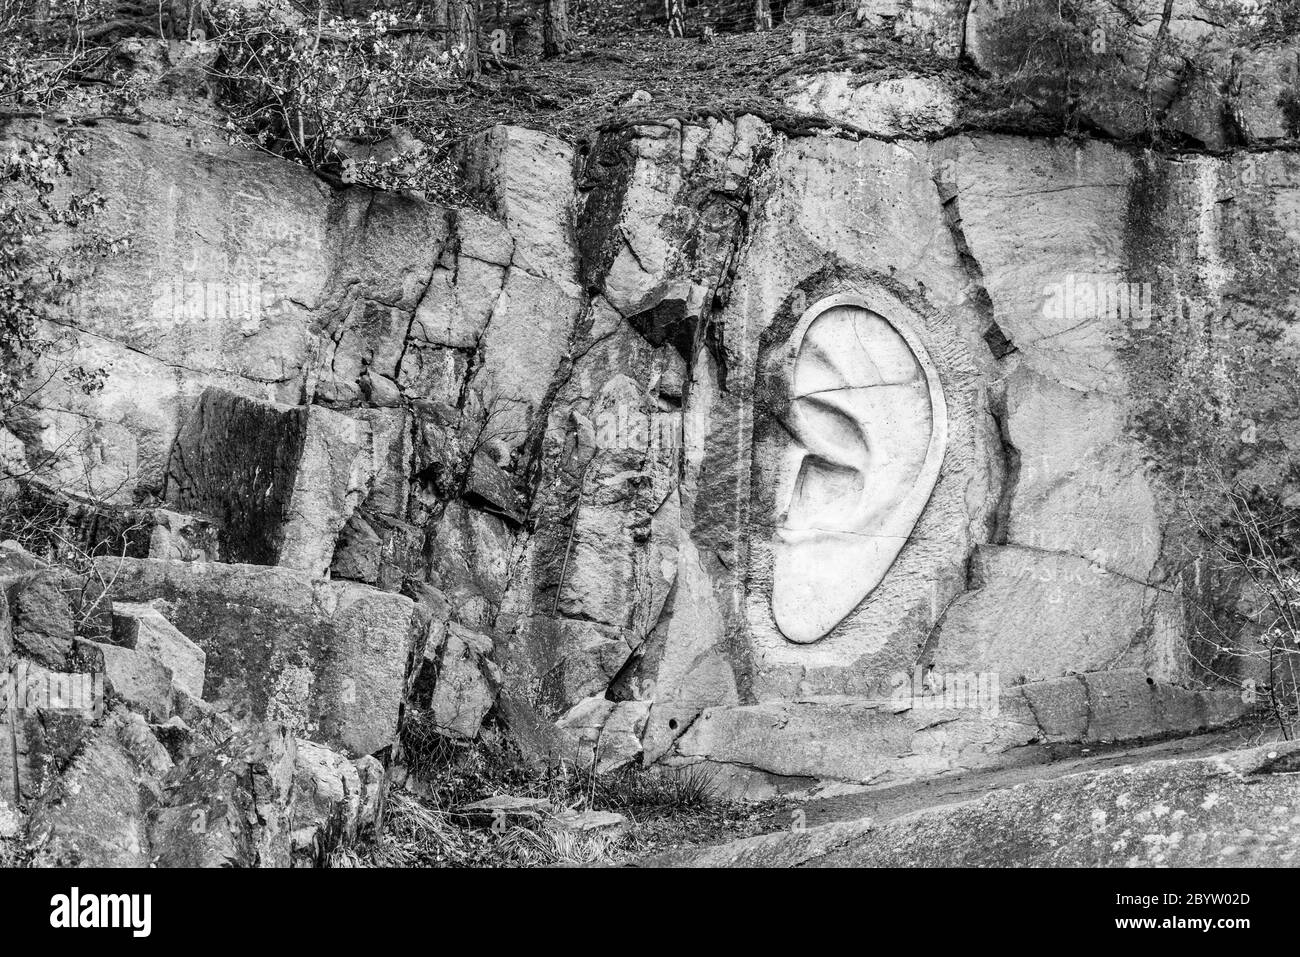 LIPNICE NAD SAZAVOU, CZECH REPUBLIC - DECEMBER 31, 2018: Bretschneider's Ear scuplture in old granite rock quarry near Lipnice Castle. Black and white image. Stock Photo